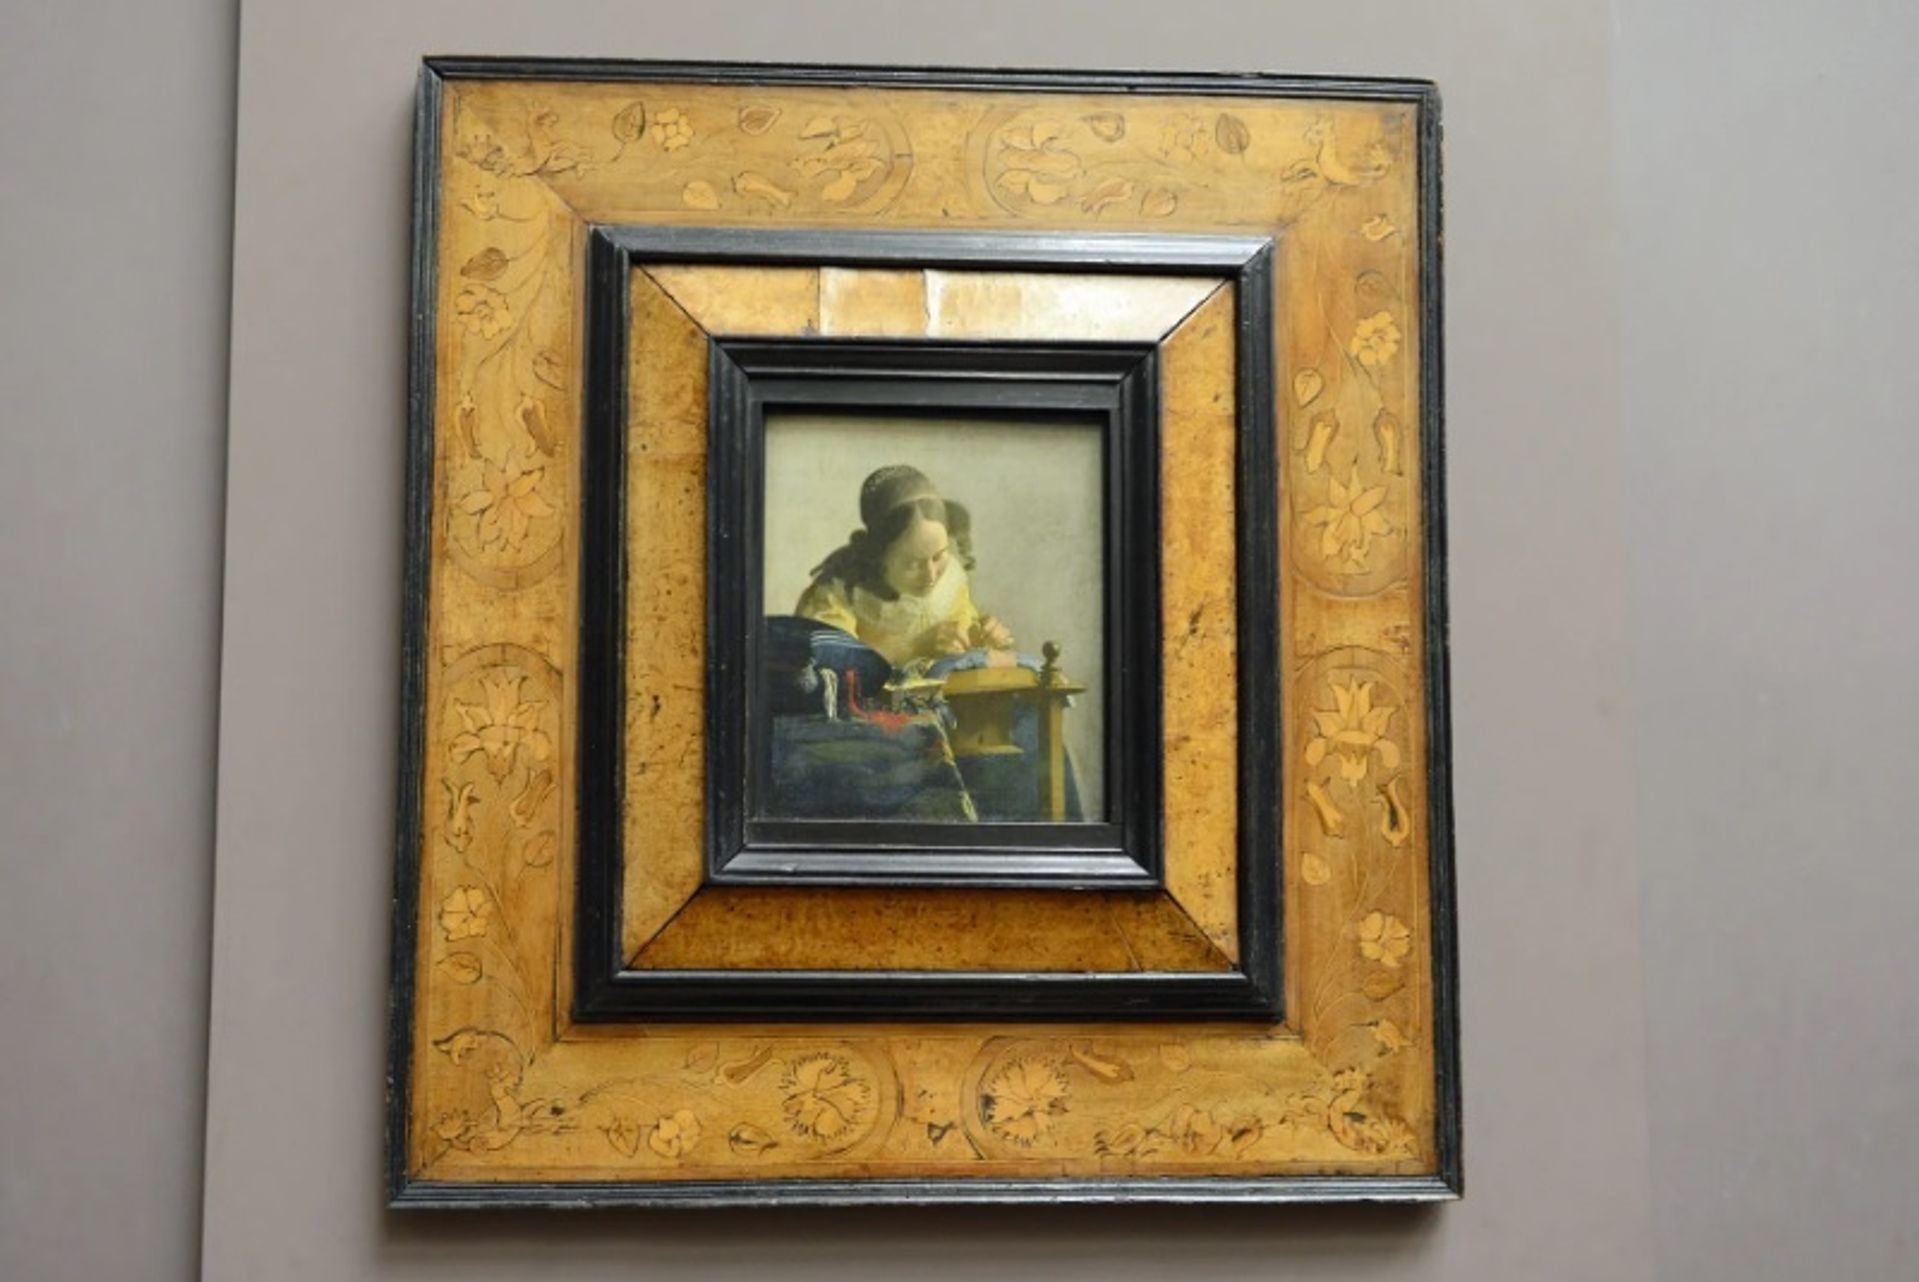 The Lacemaker של יוהנס ורמיר (1666-68) במוזיאון ה"לובר" בפריז

צילום: הבן של גרוצ'ו